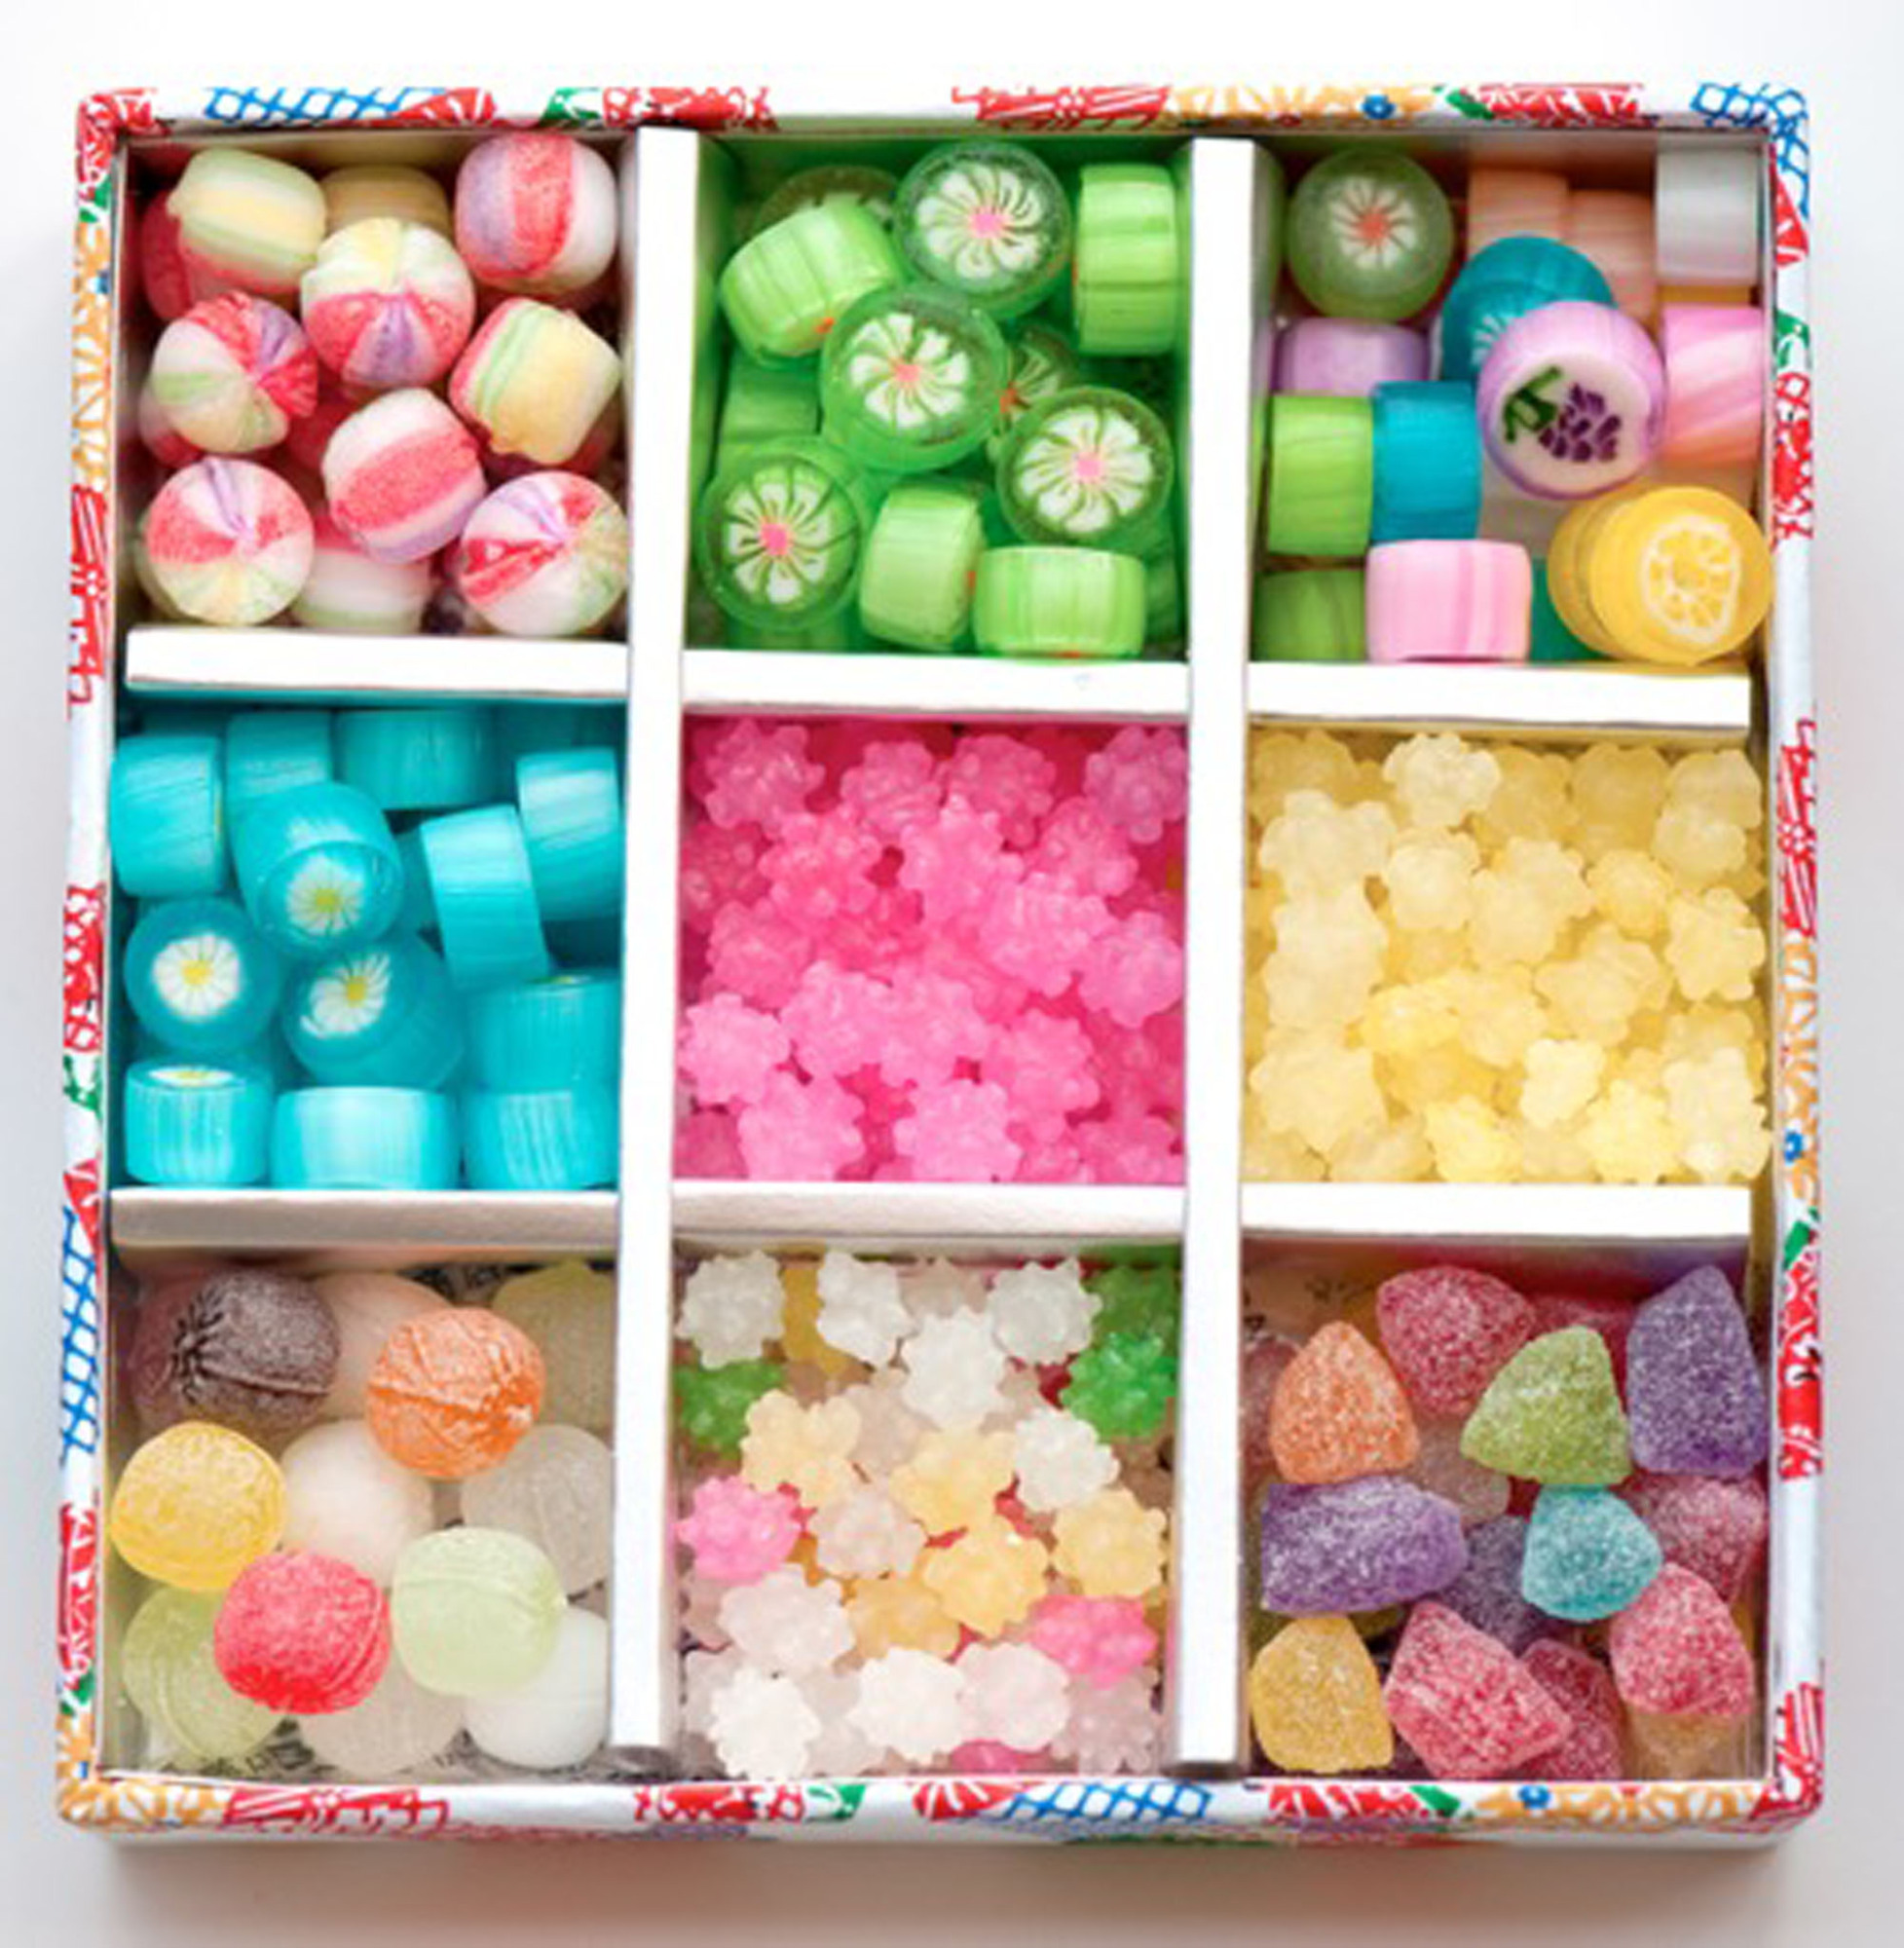 Wagashi confections enjoy increased global popularity ...